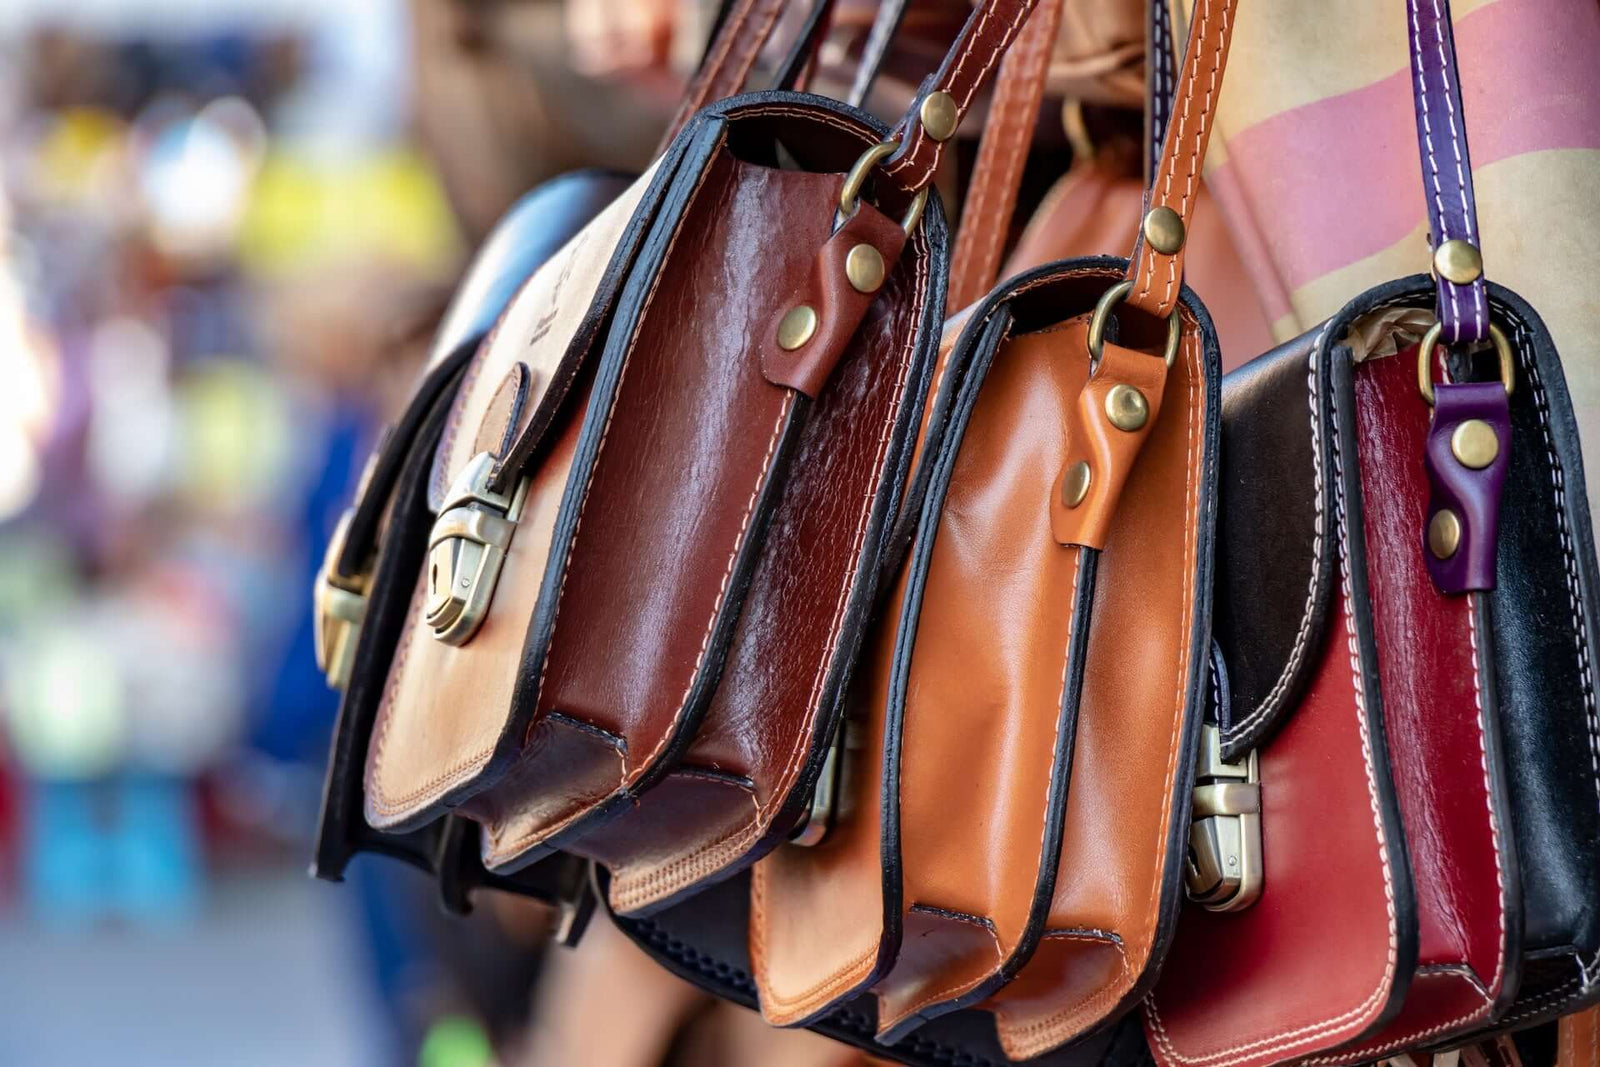 Are Italian leather bags cheaper?